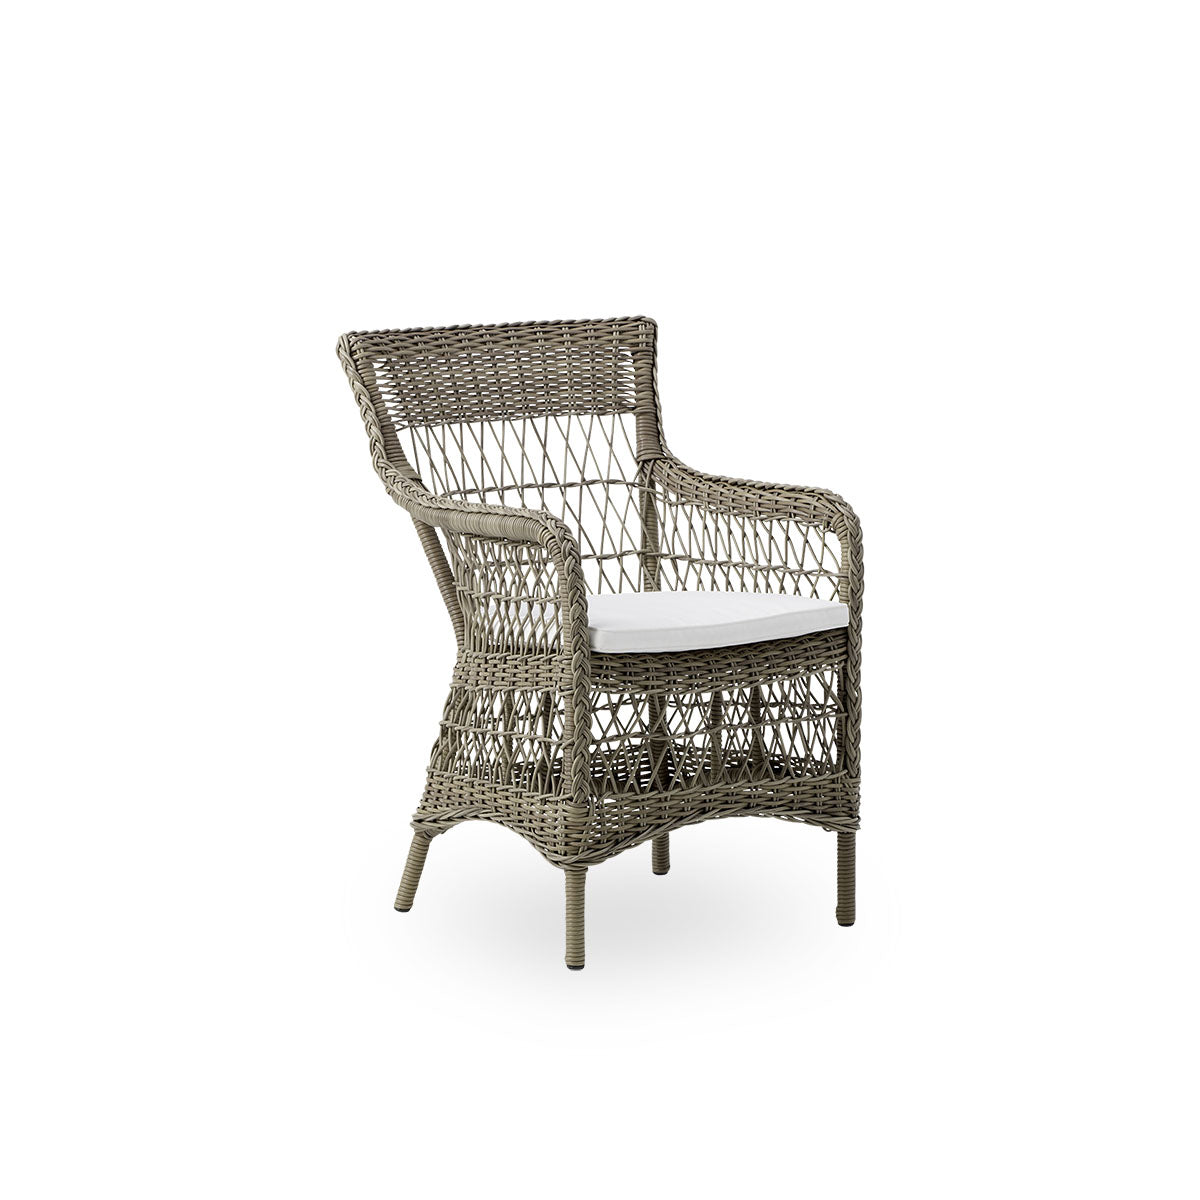 Outdoor Garden Chairs | Sika Design Denmark - Sika-Design.com